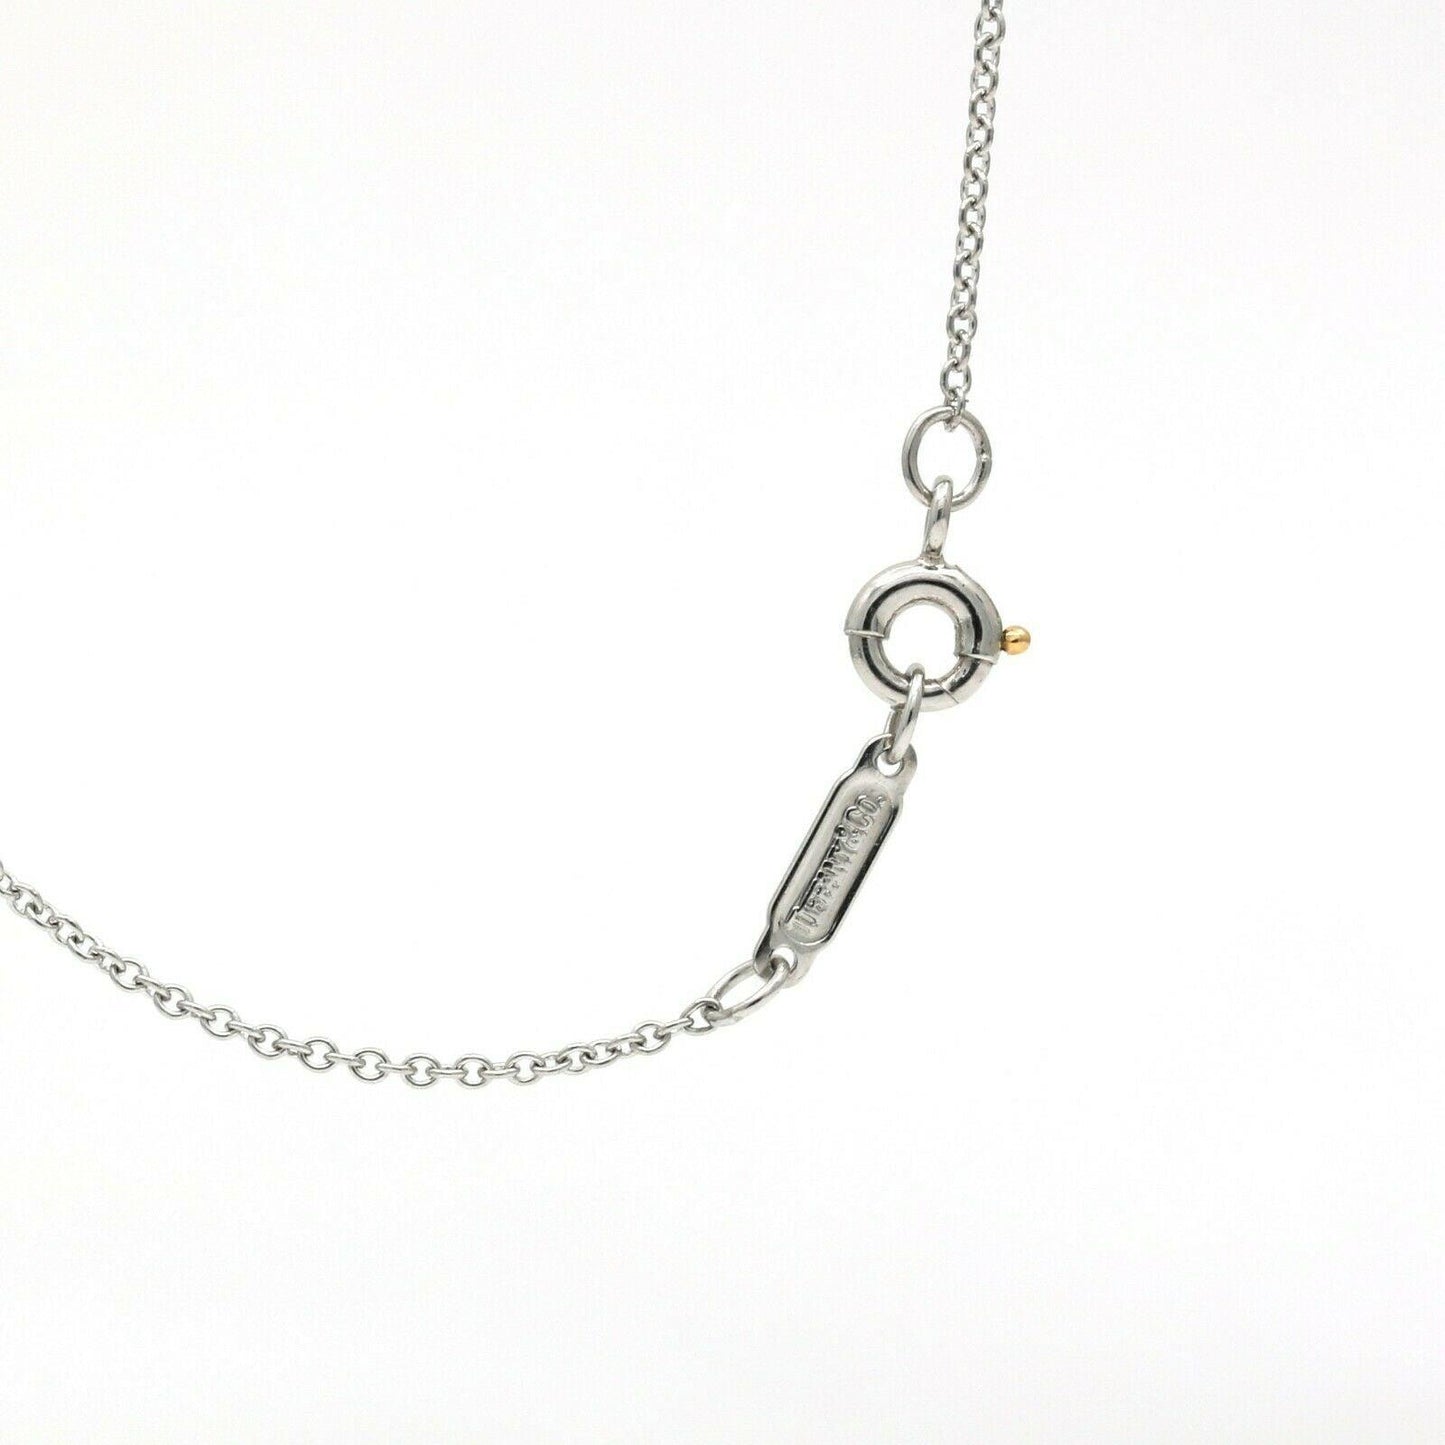 Women's Tiffany & Co. Diamond Small Cross Pendant Necklace in Platinum - 31 Jewels Inc.